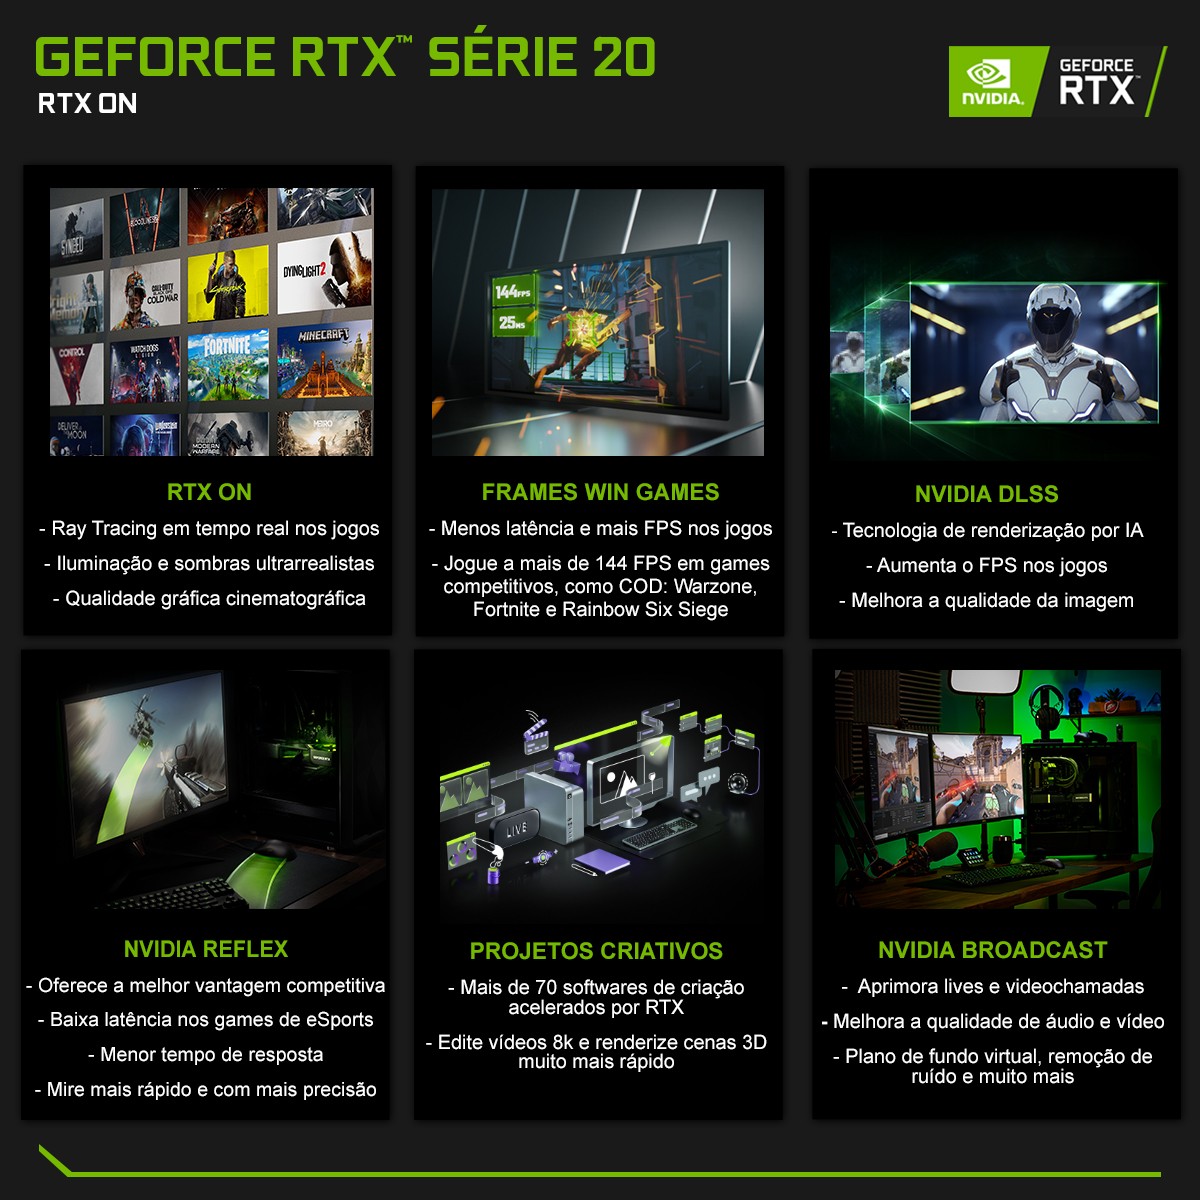 Placa de Vídeo EVGA Geforce RTX 2070 Black Gaming Dual, 8GB GDDR6, 256Bit, 08G-P4-1071-KR